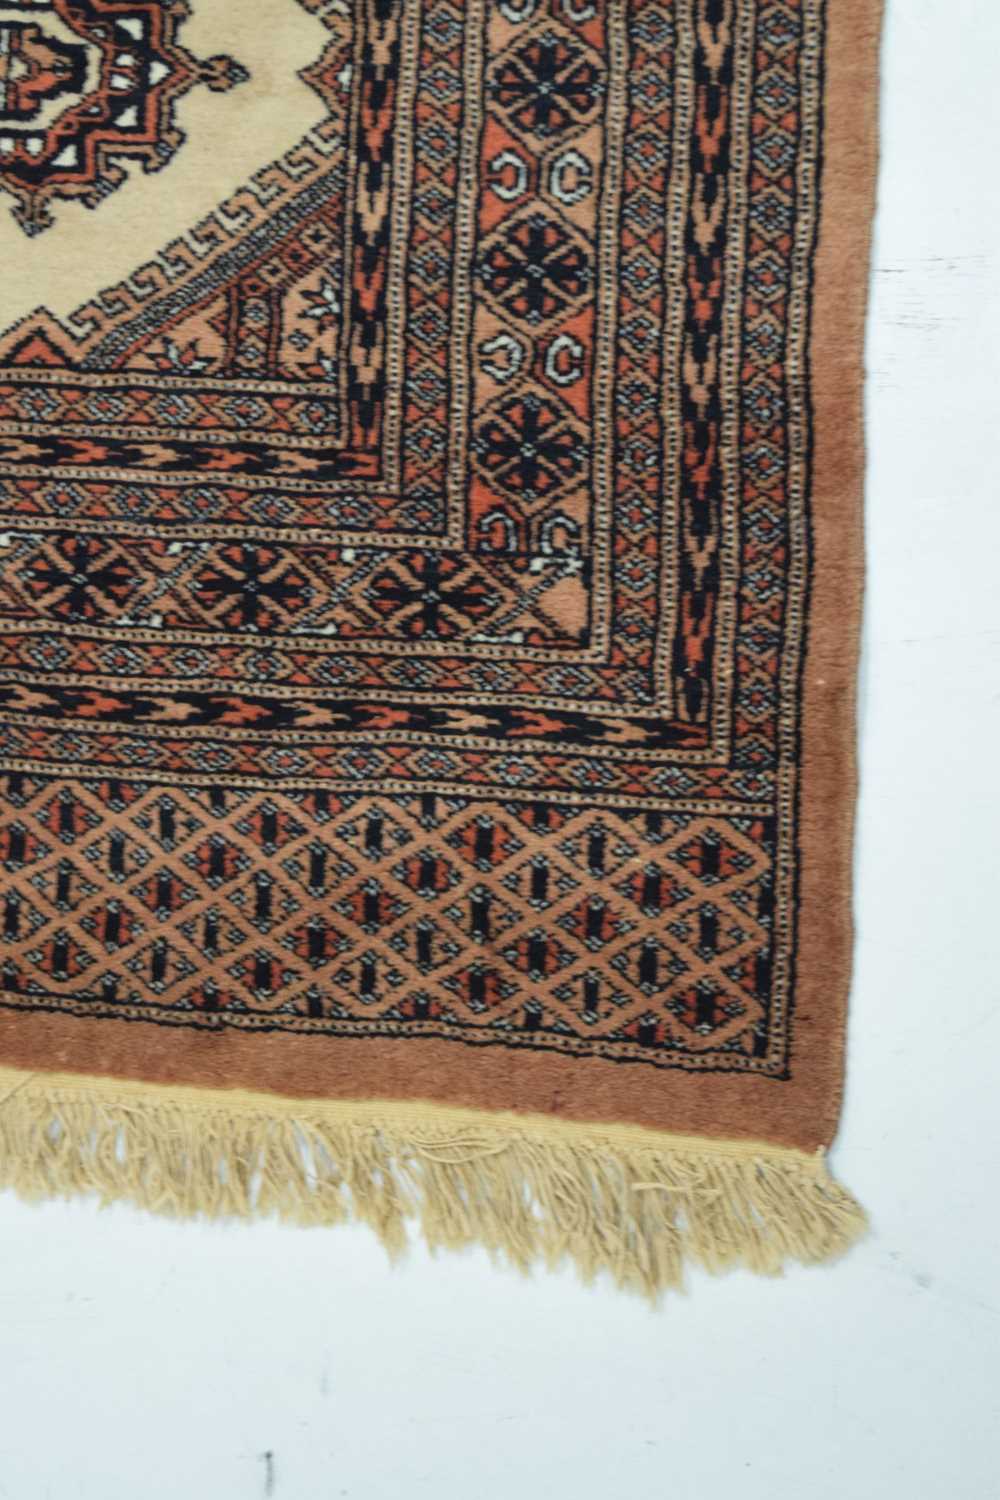 Middle Eastern wool rug - Image 3 of 9